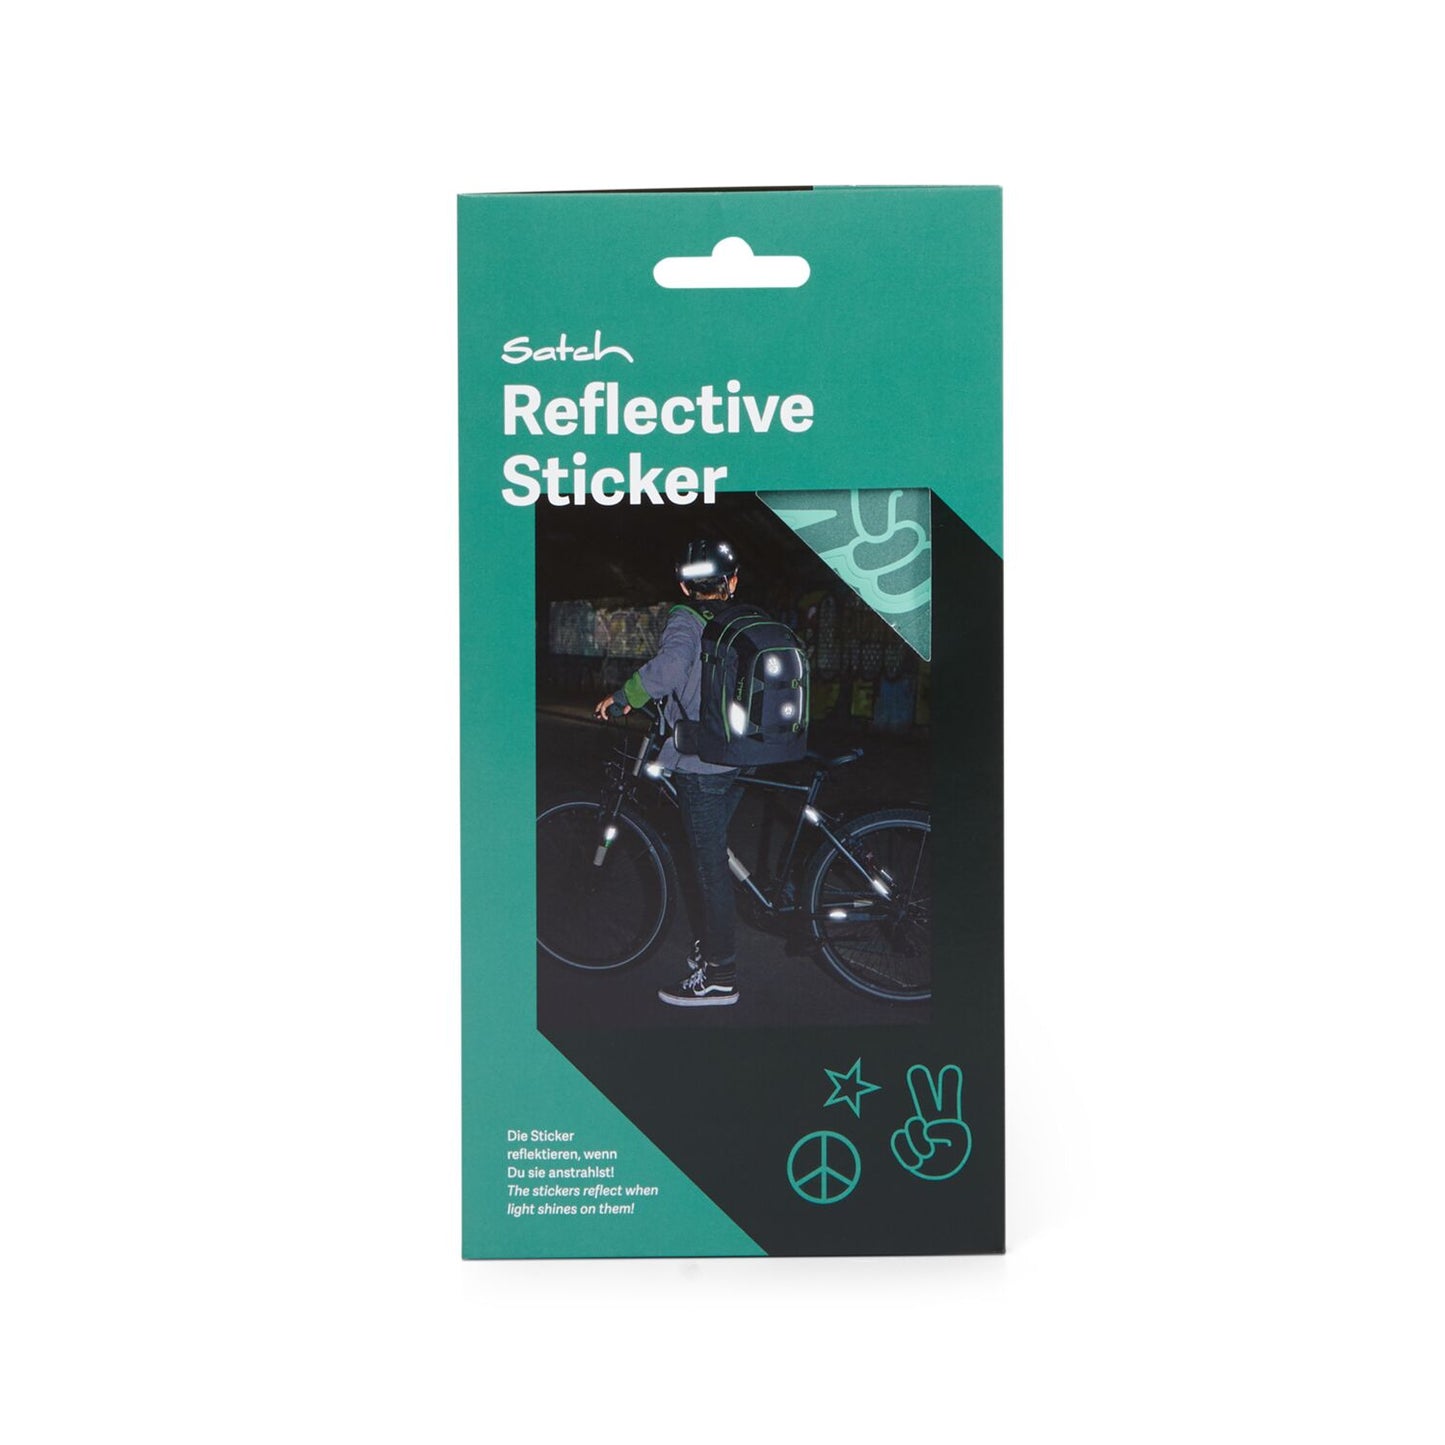 Reflective Sticker Mint